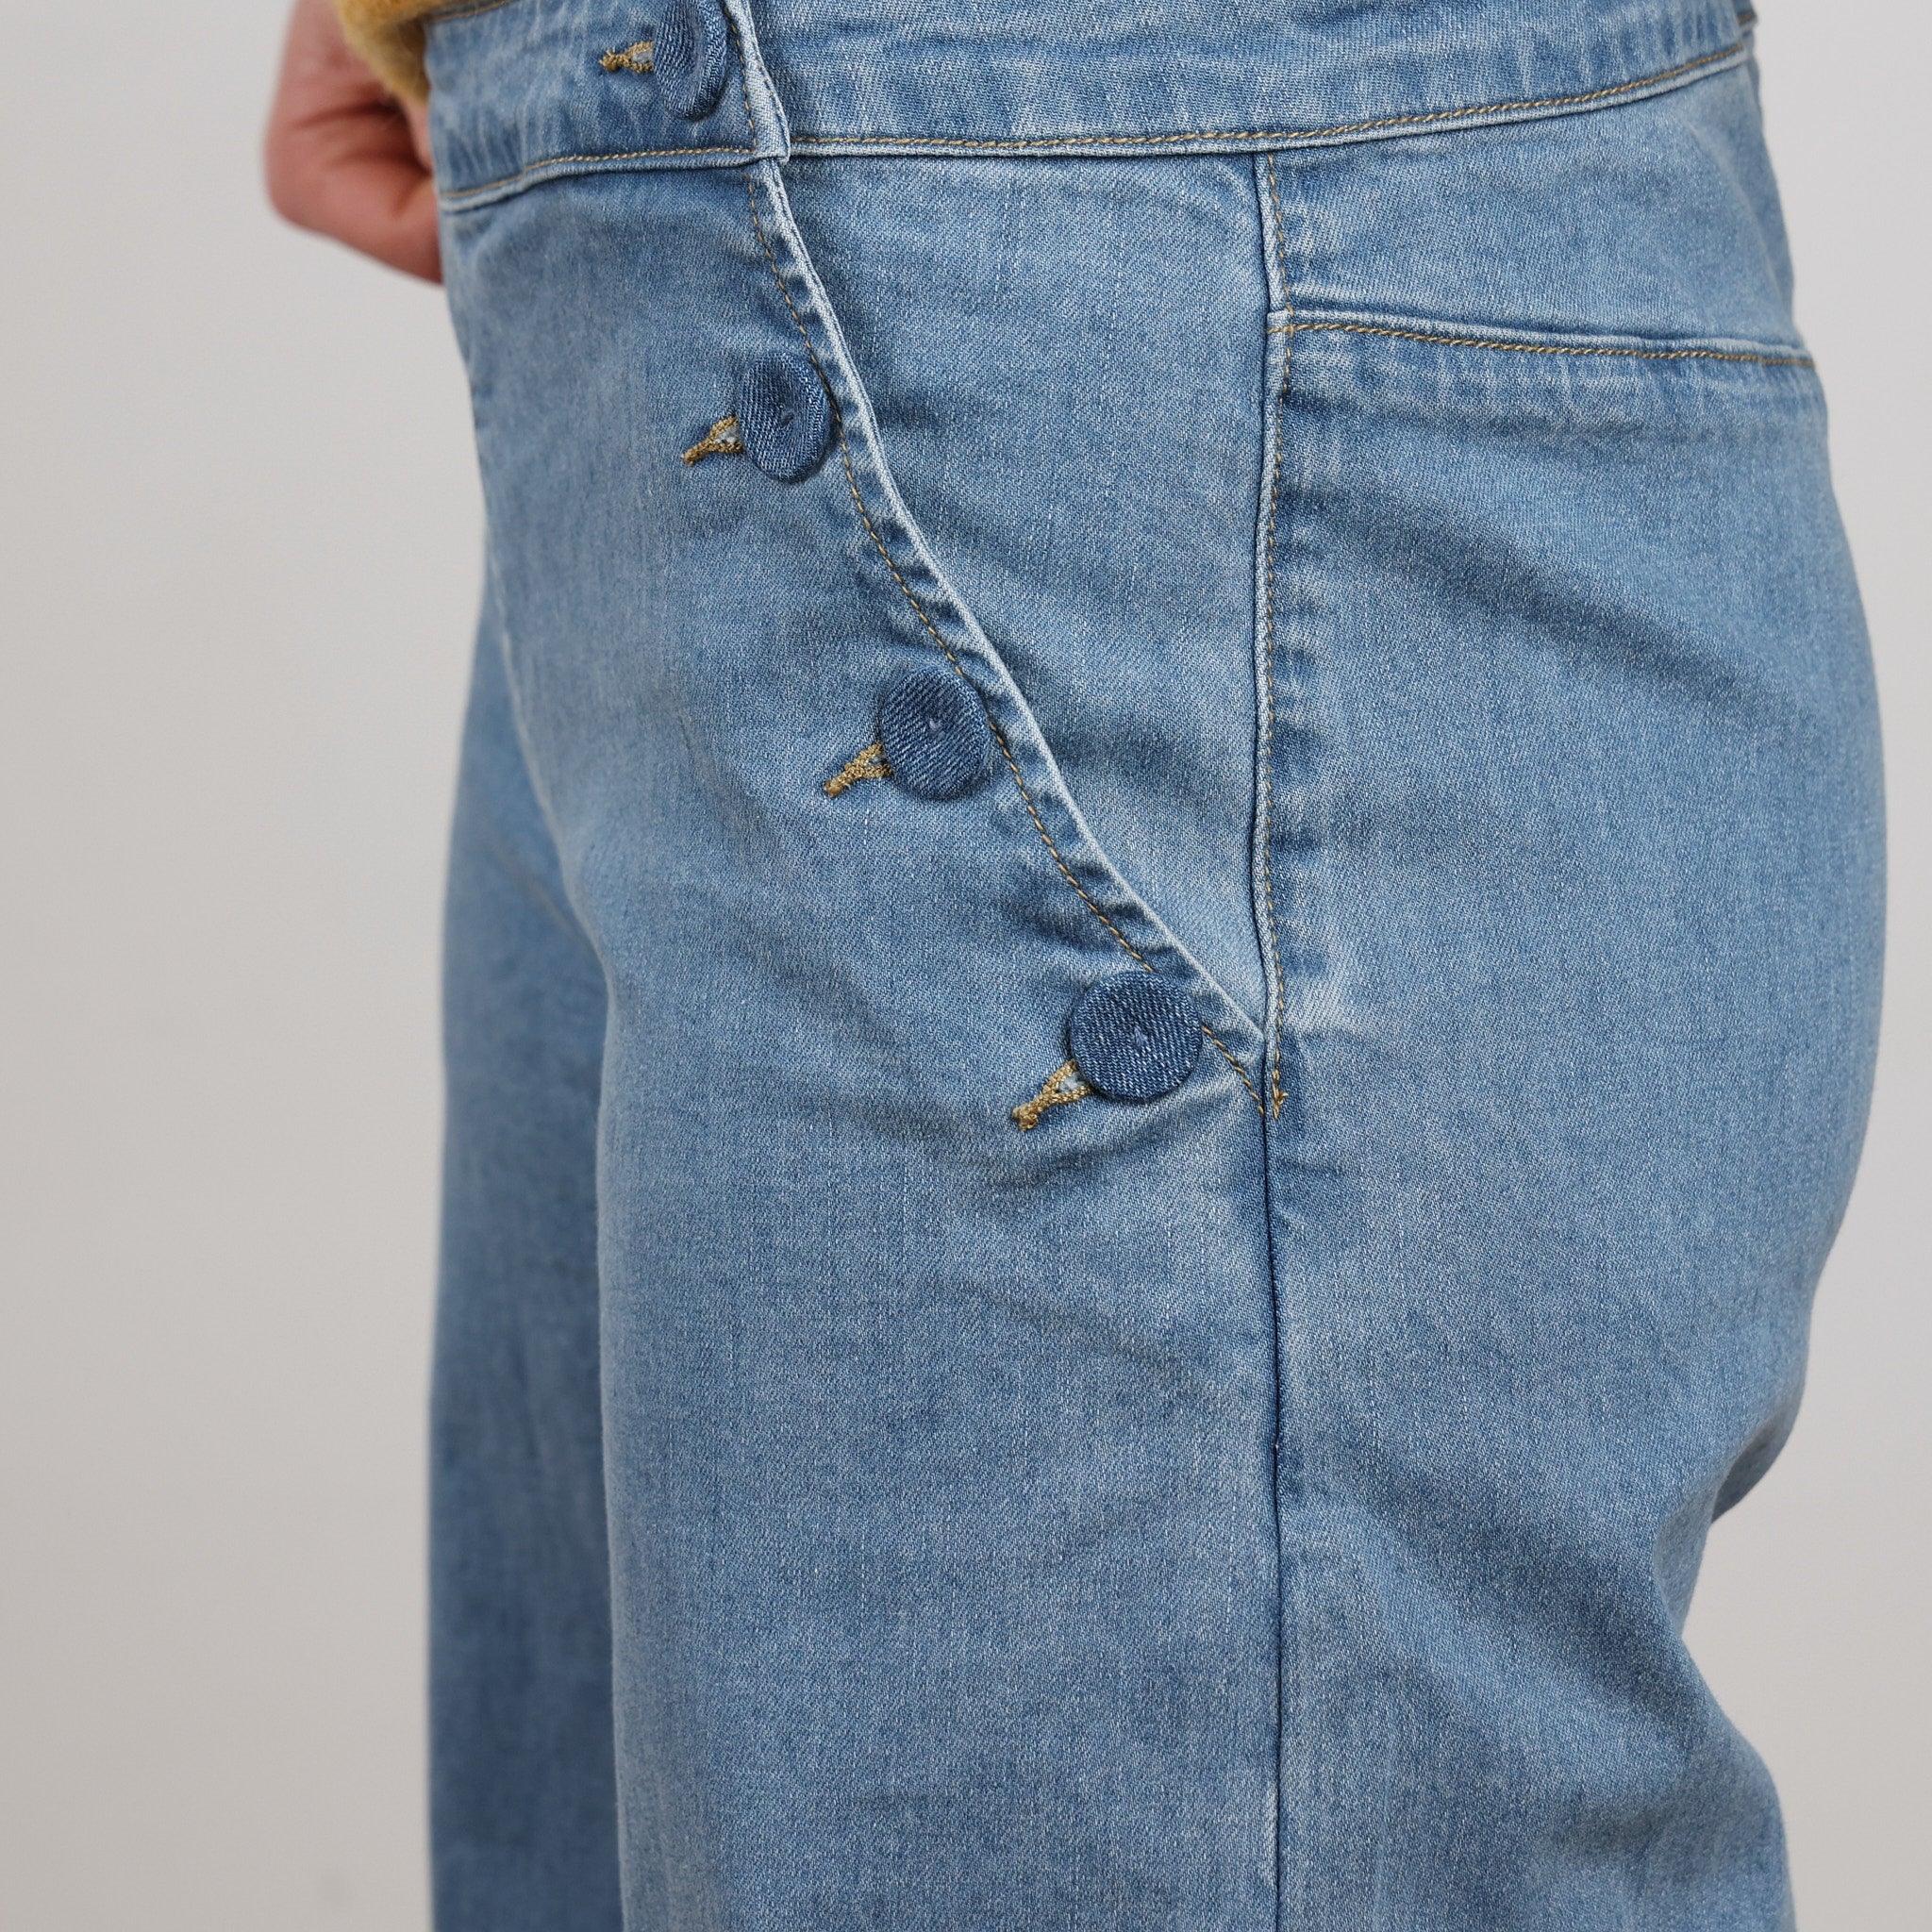 Jeans, Waist 30